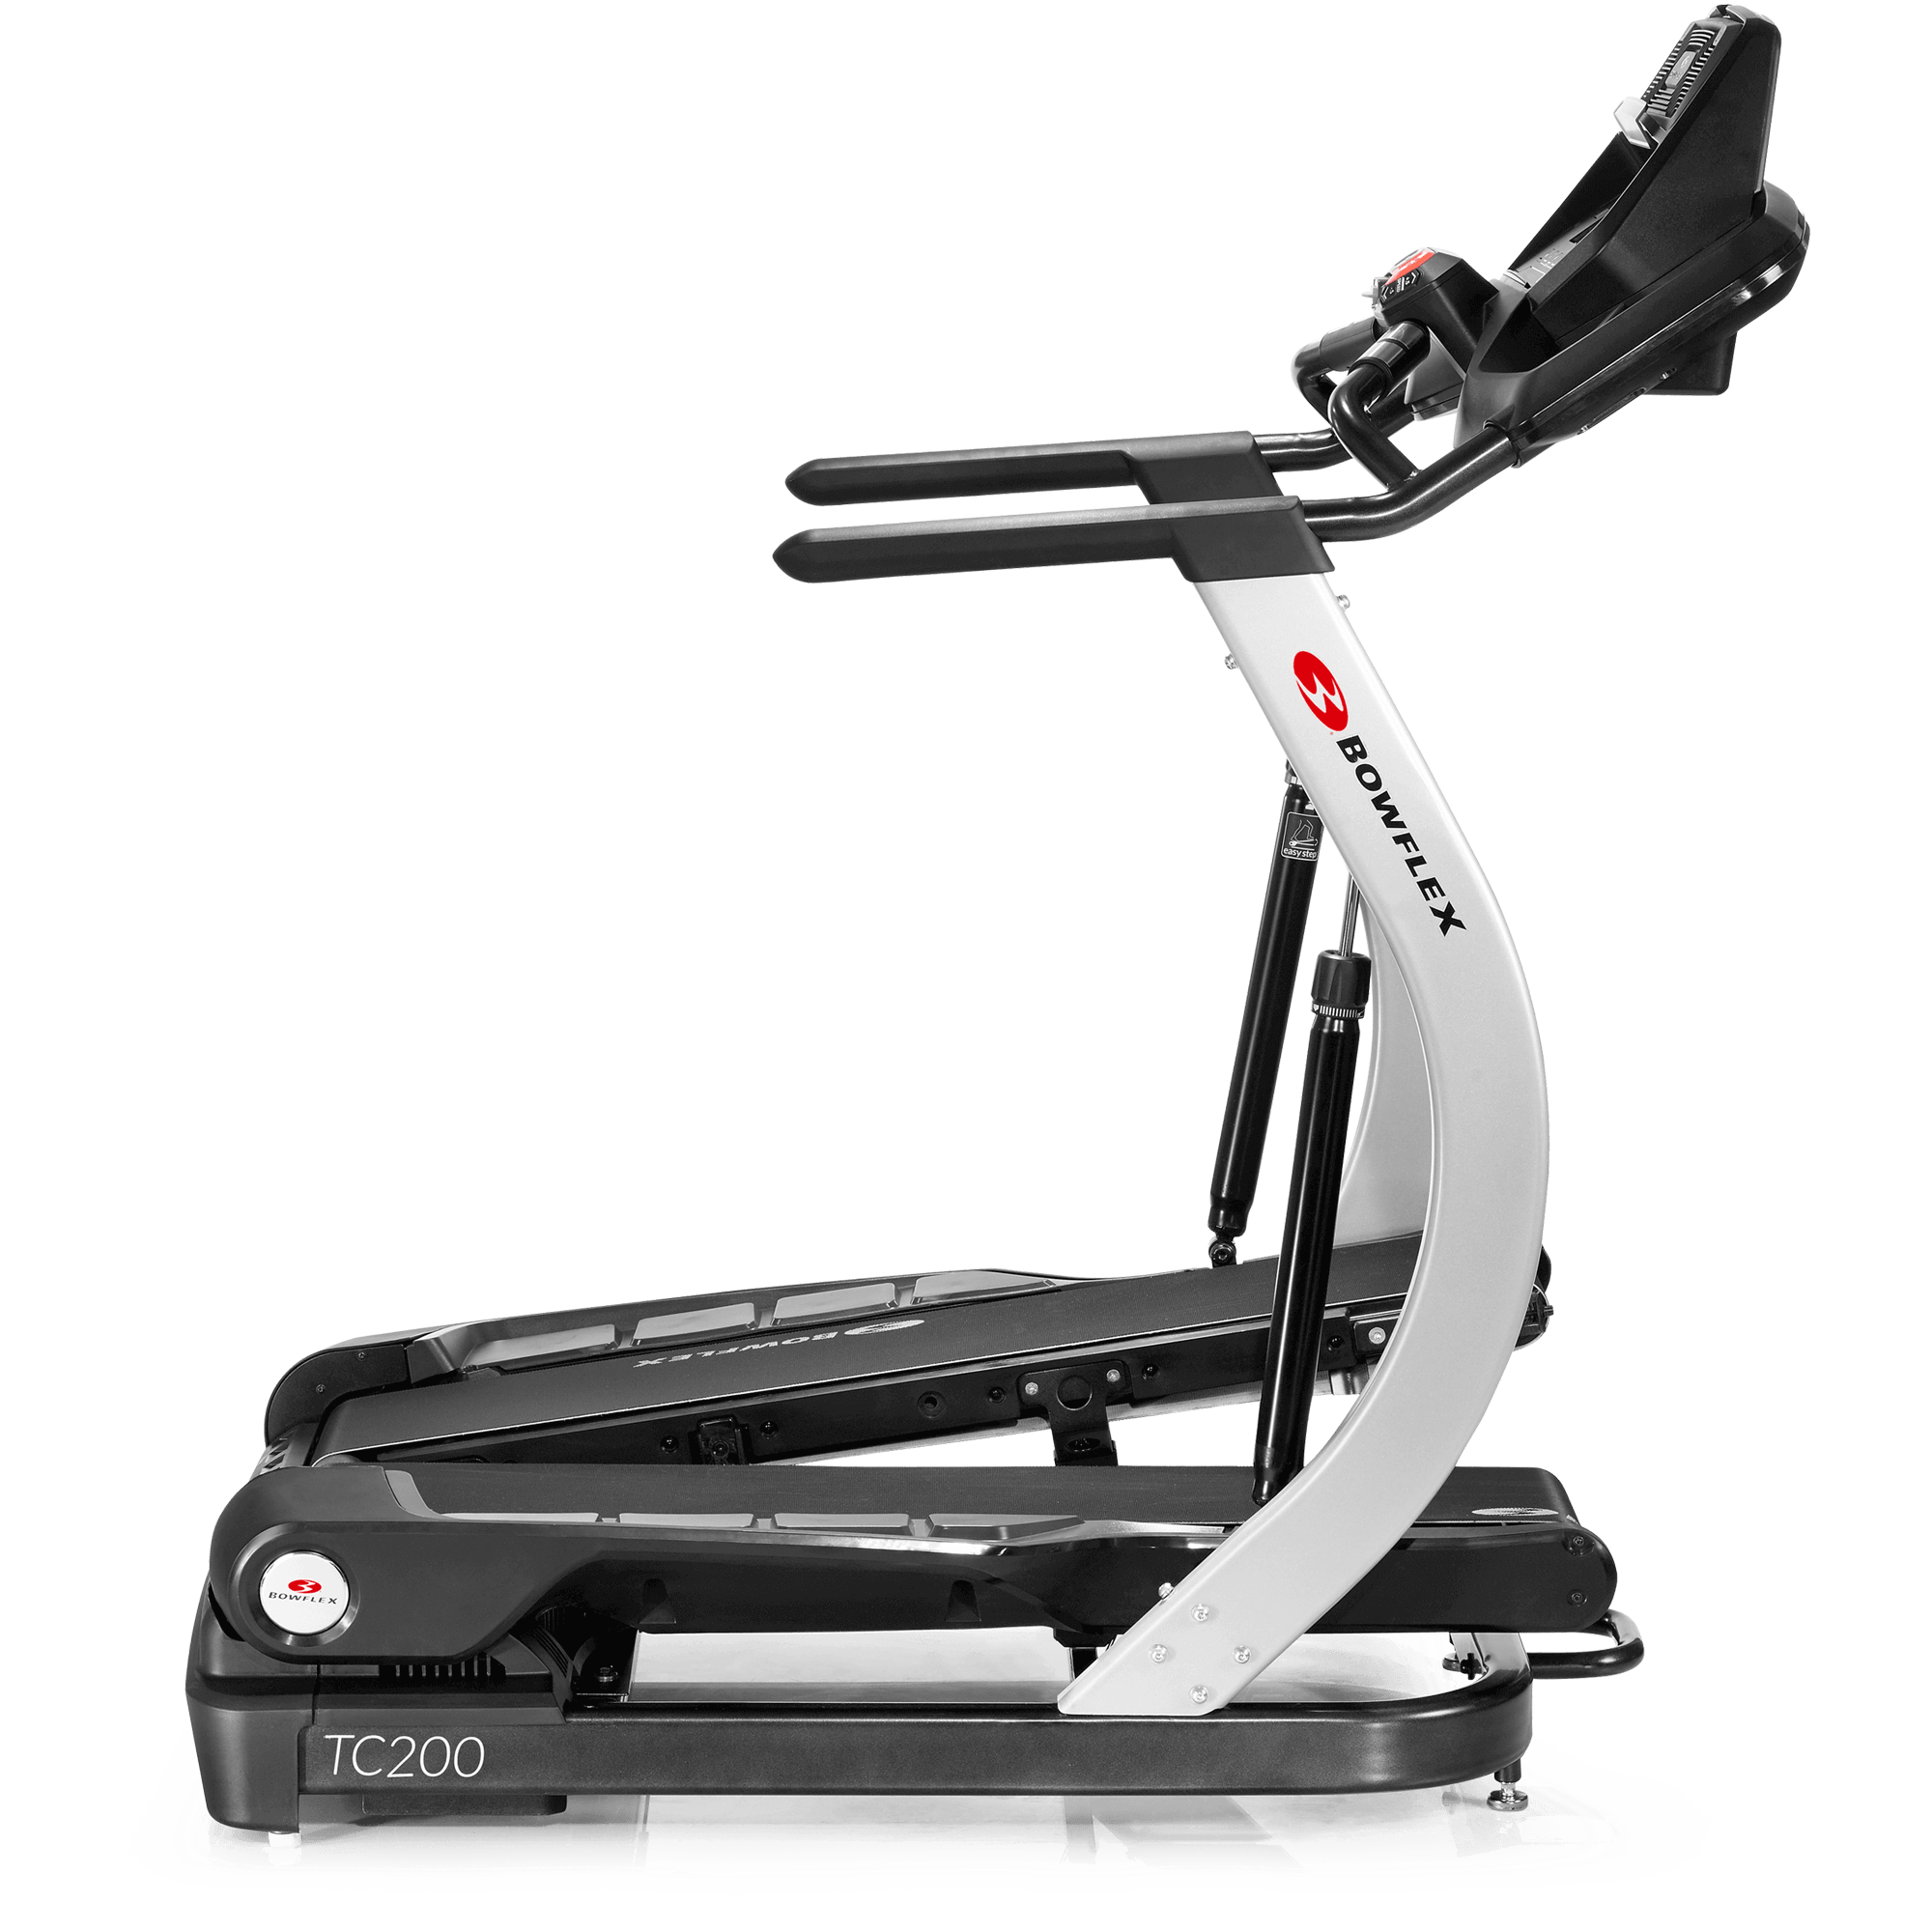 Bowflex Nautilus Residential Treadmill Treadclimber Right Guide Belt 